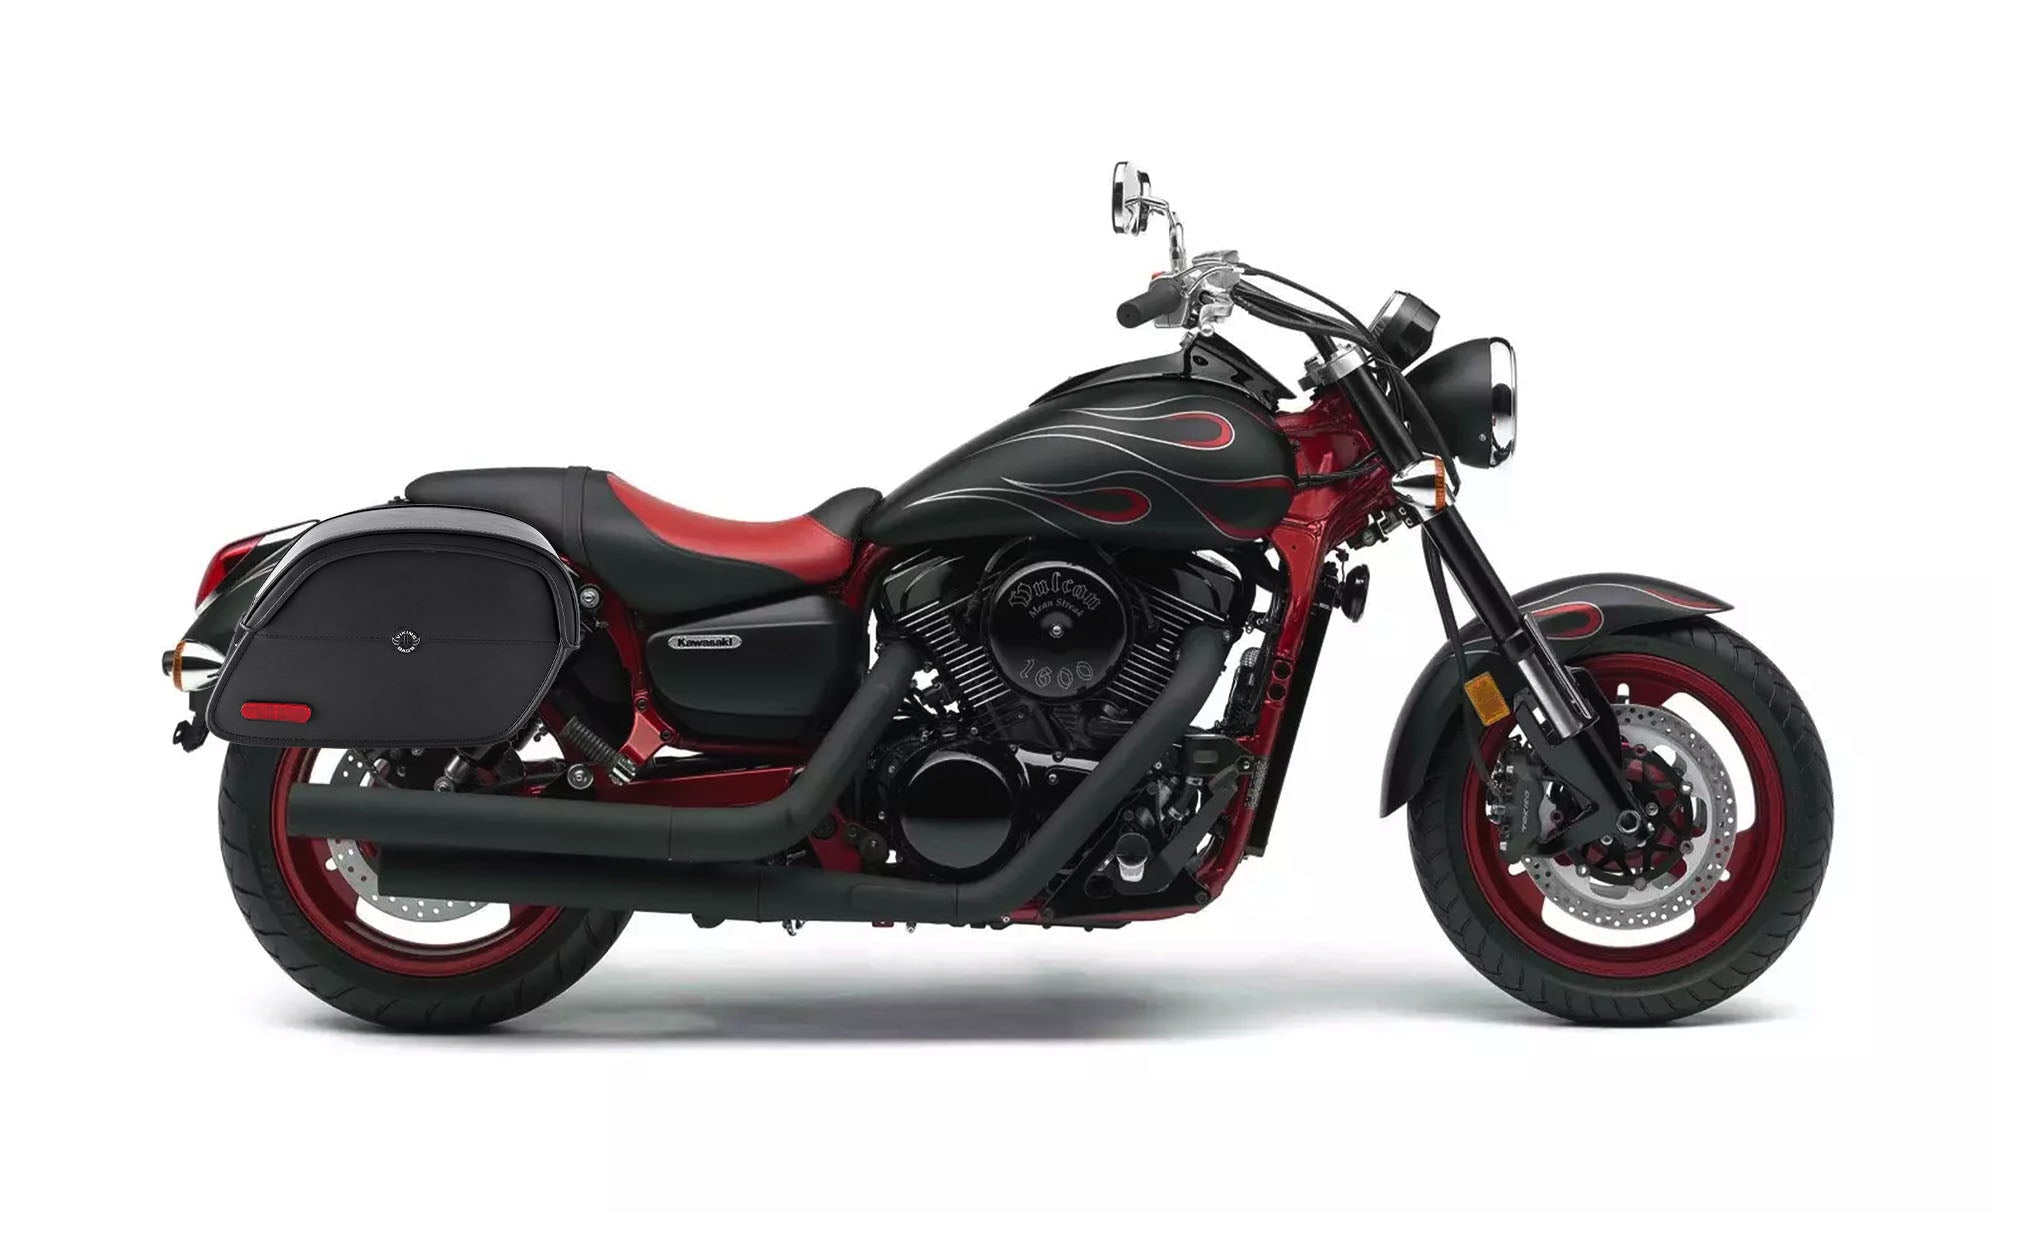 Viking California Large Kawasaki Mean Streak 1600 Leather Motorcycle Saddlebags on Bike Photo @expand